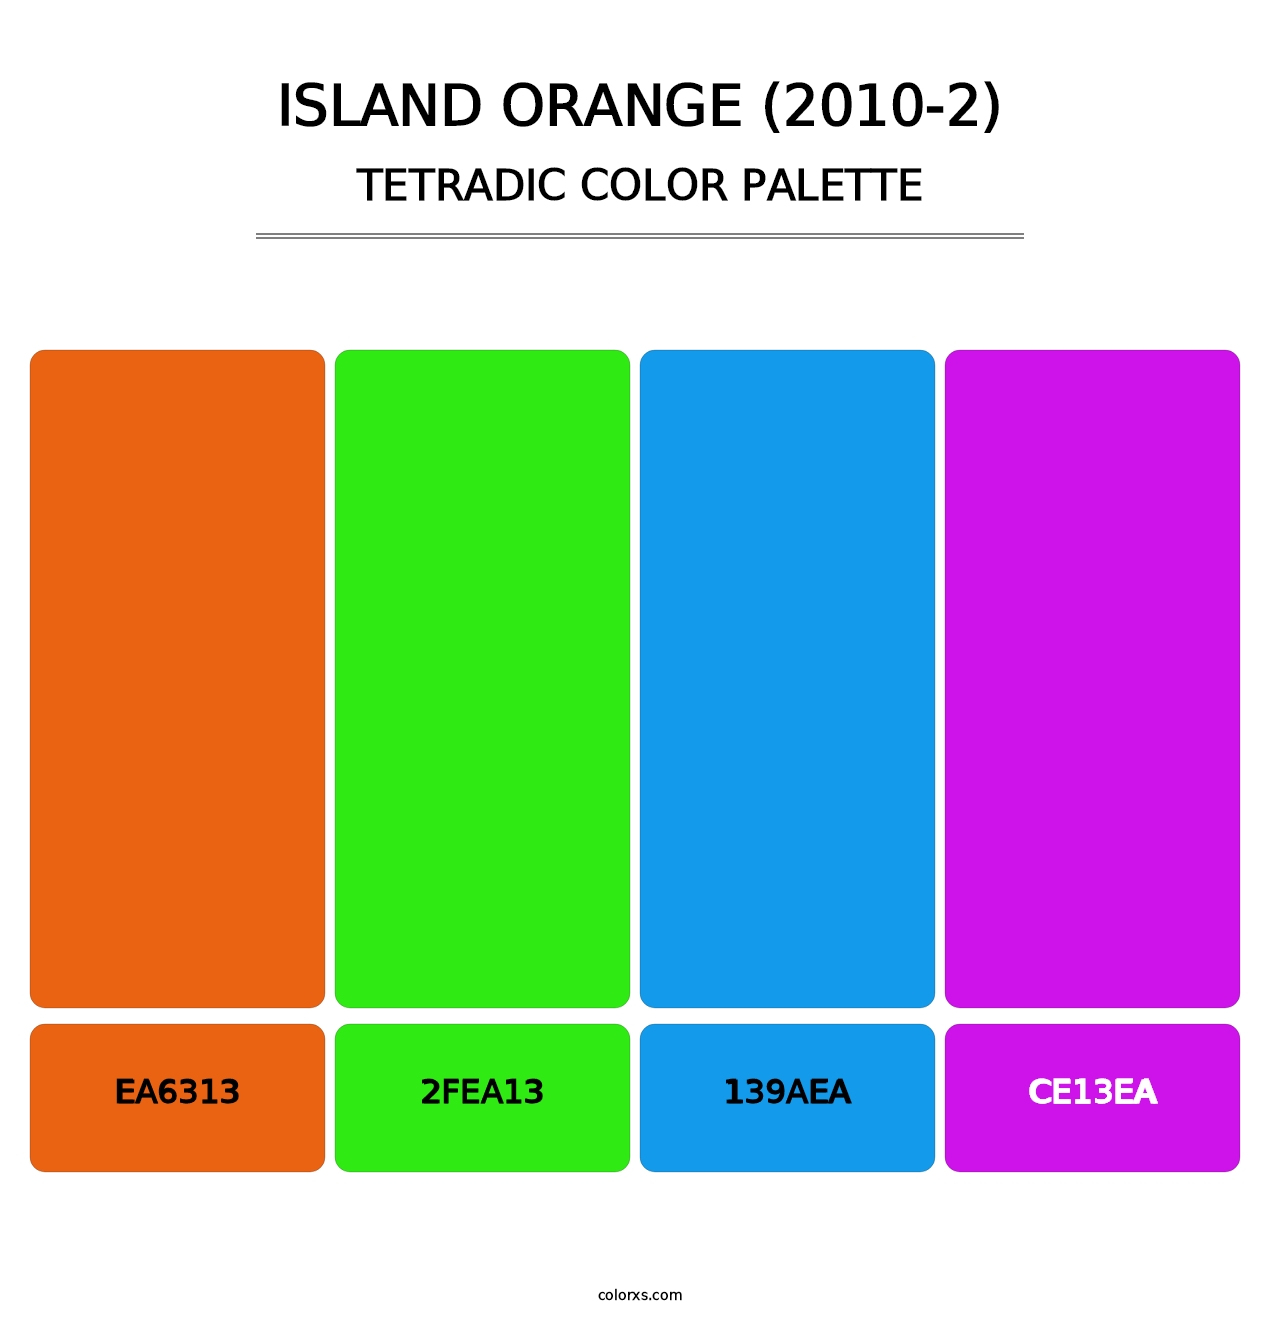 Island Orange (2010-2) - Tetradic Color Palette